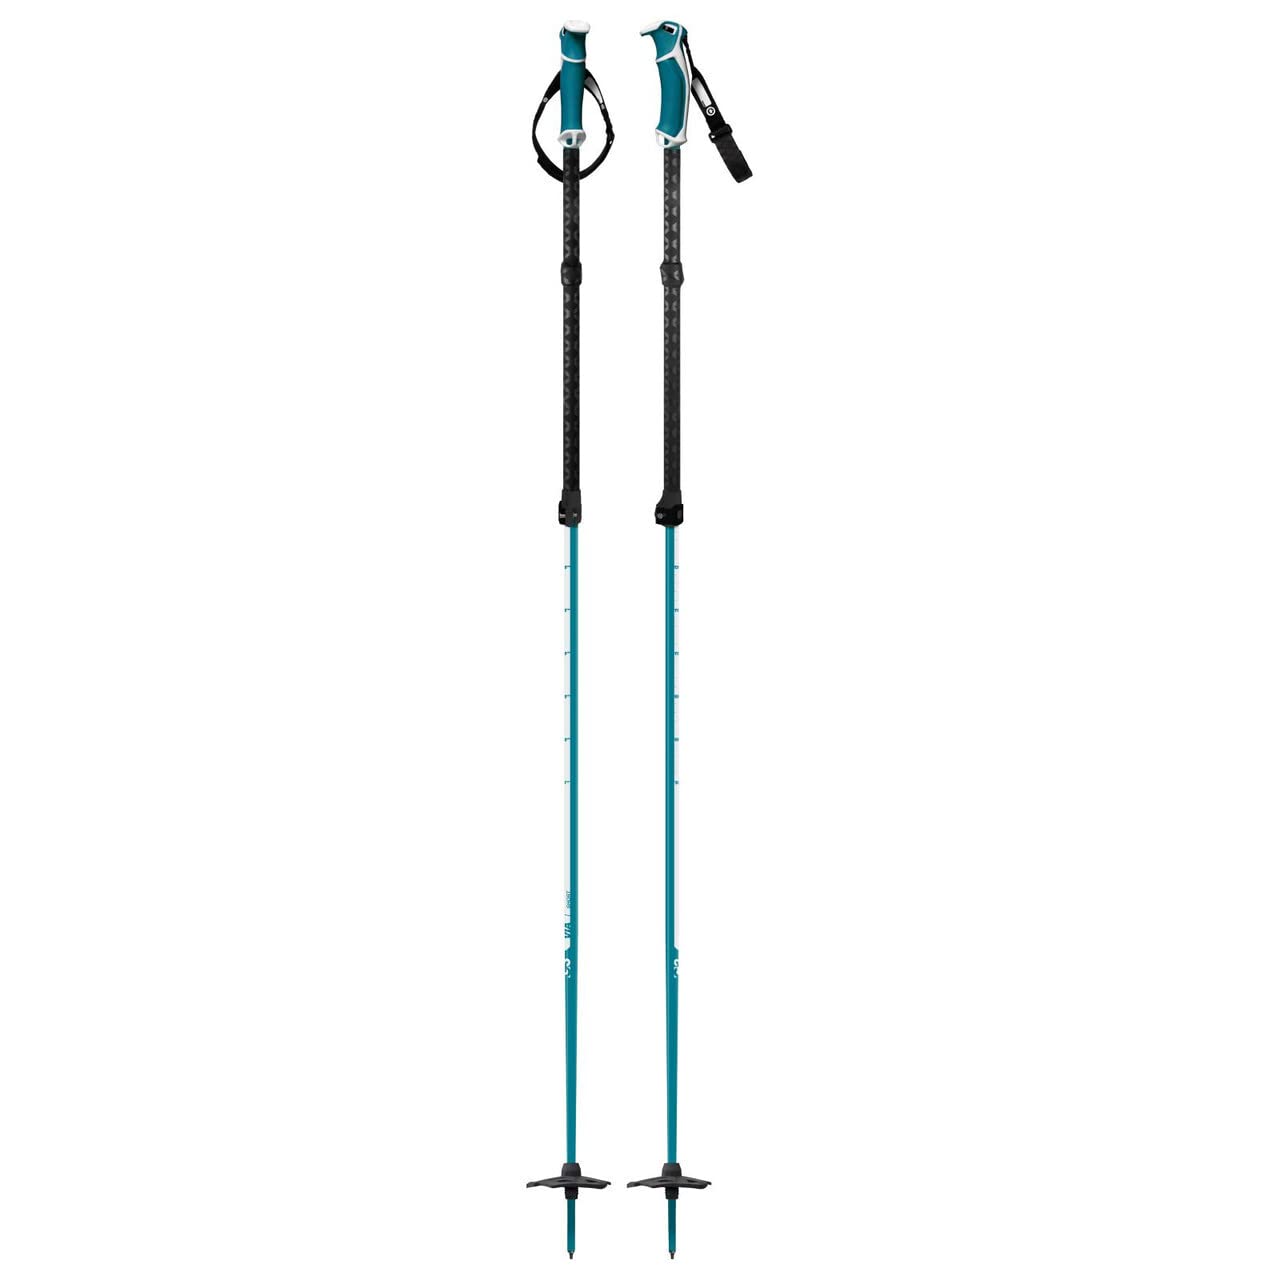 G3 GENUINE GUIDE GEAR VIA Aluminum Ski Poles, Tough Adjustable Two Piece ski Pole, Ergonomic Dual Density Grips, QuickFlick Utility tab, Removable Backcountry Strap, Pair (Long)